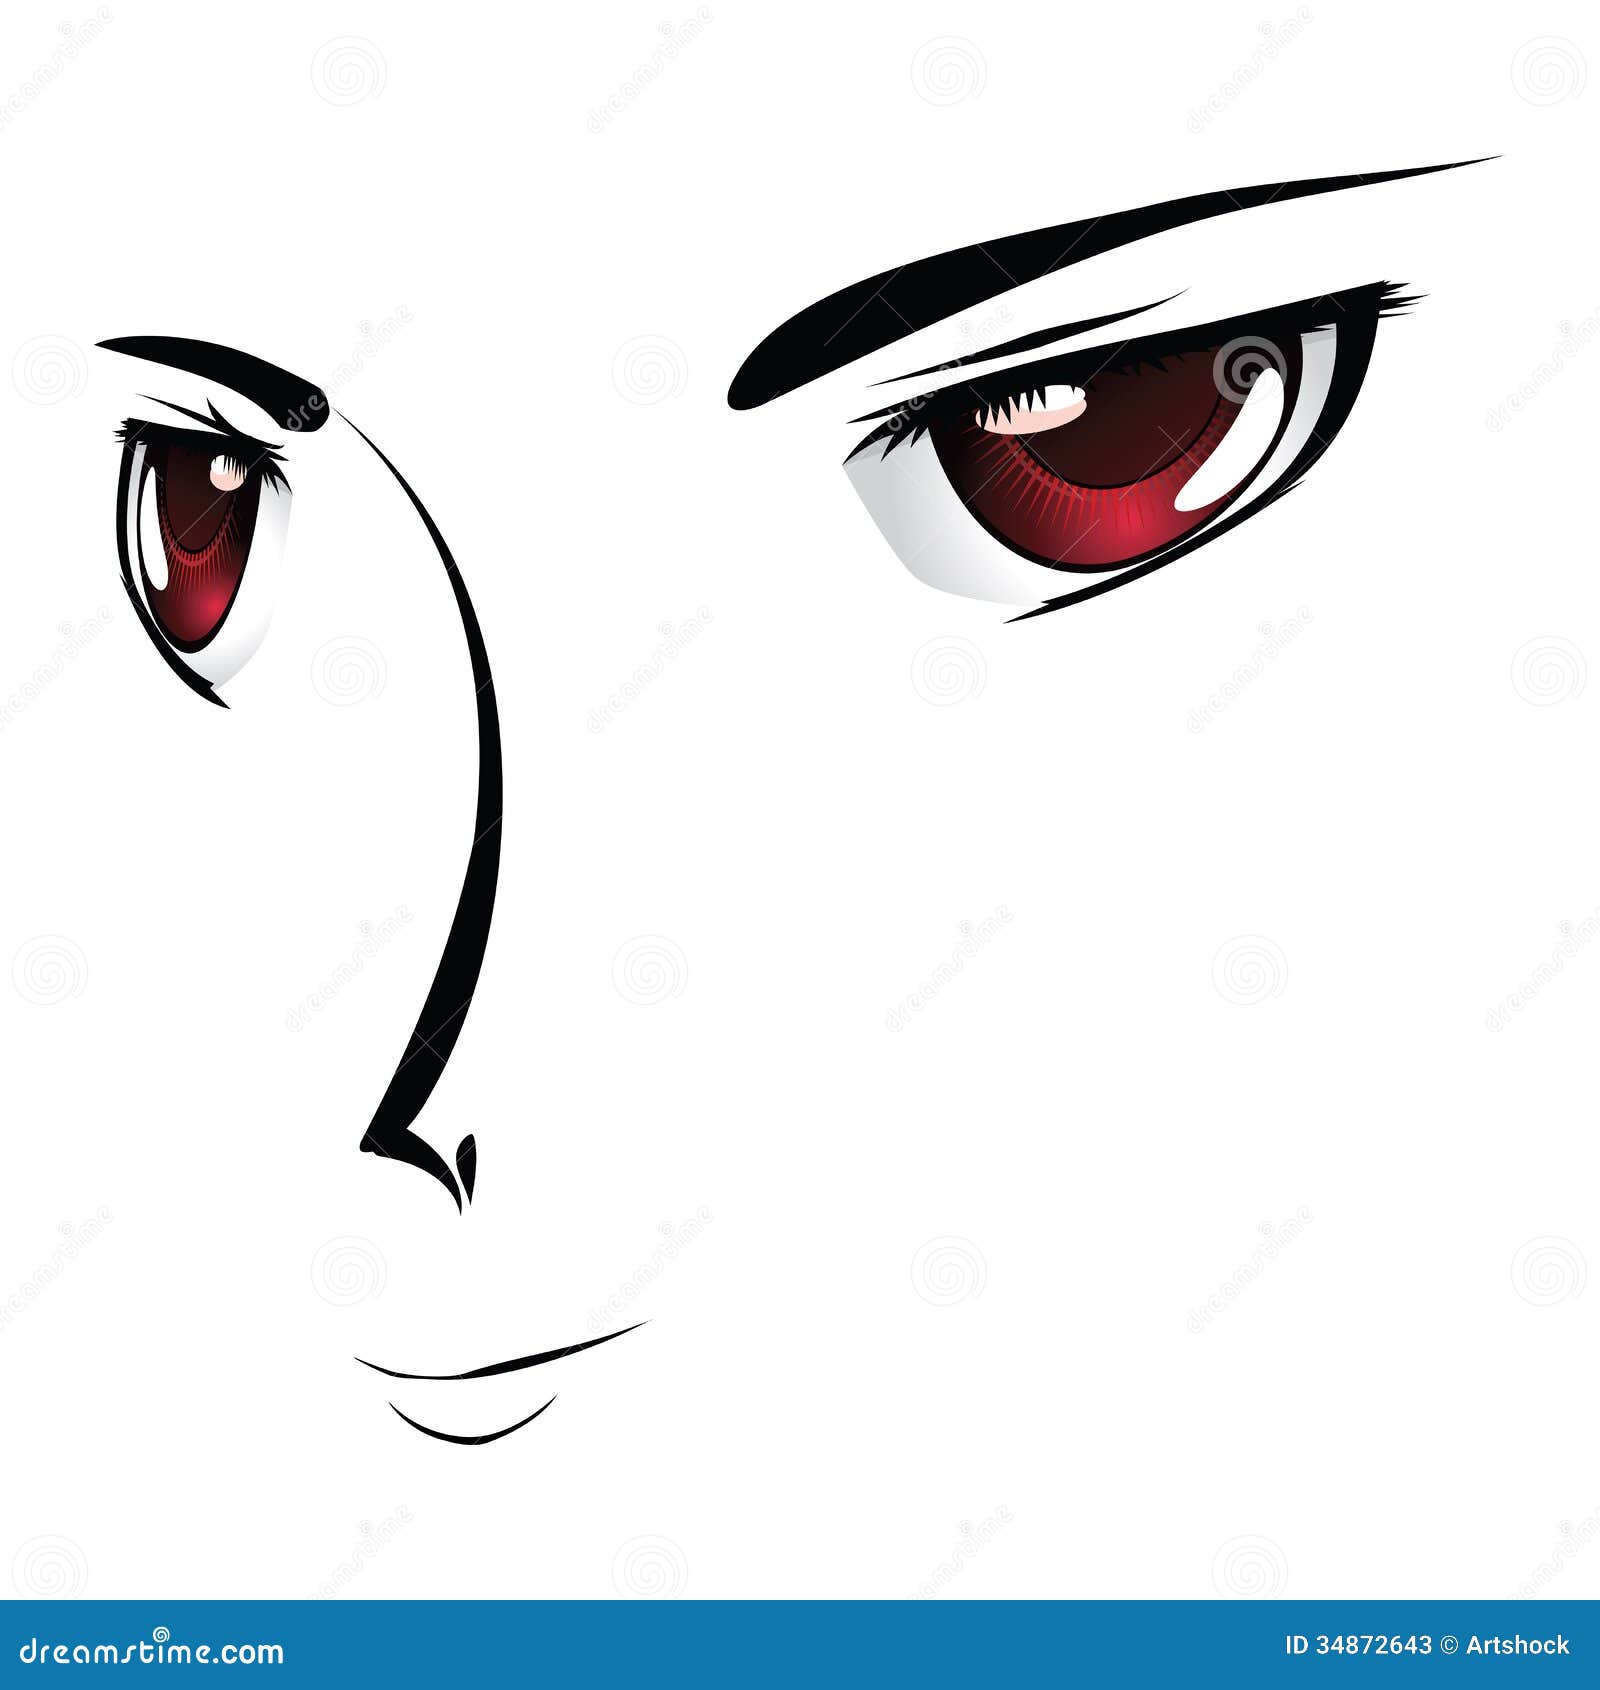 HD wallpaper: red eyes artwork, Kagerou Project, digital art, anime, black  | Wallpaper Flare